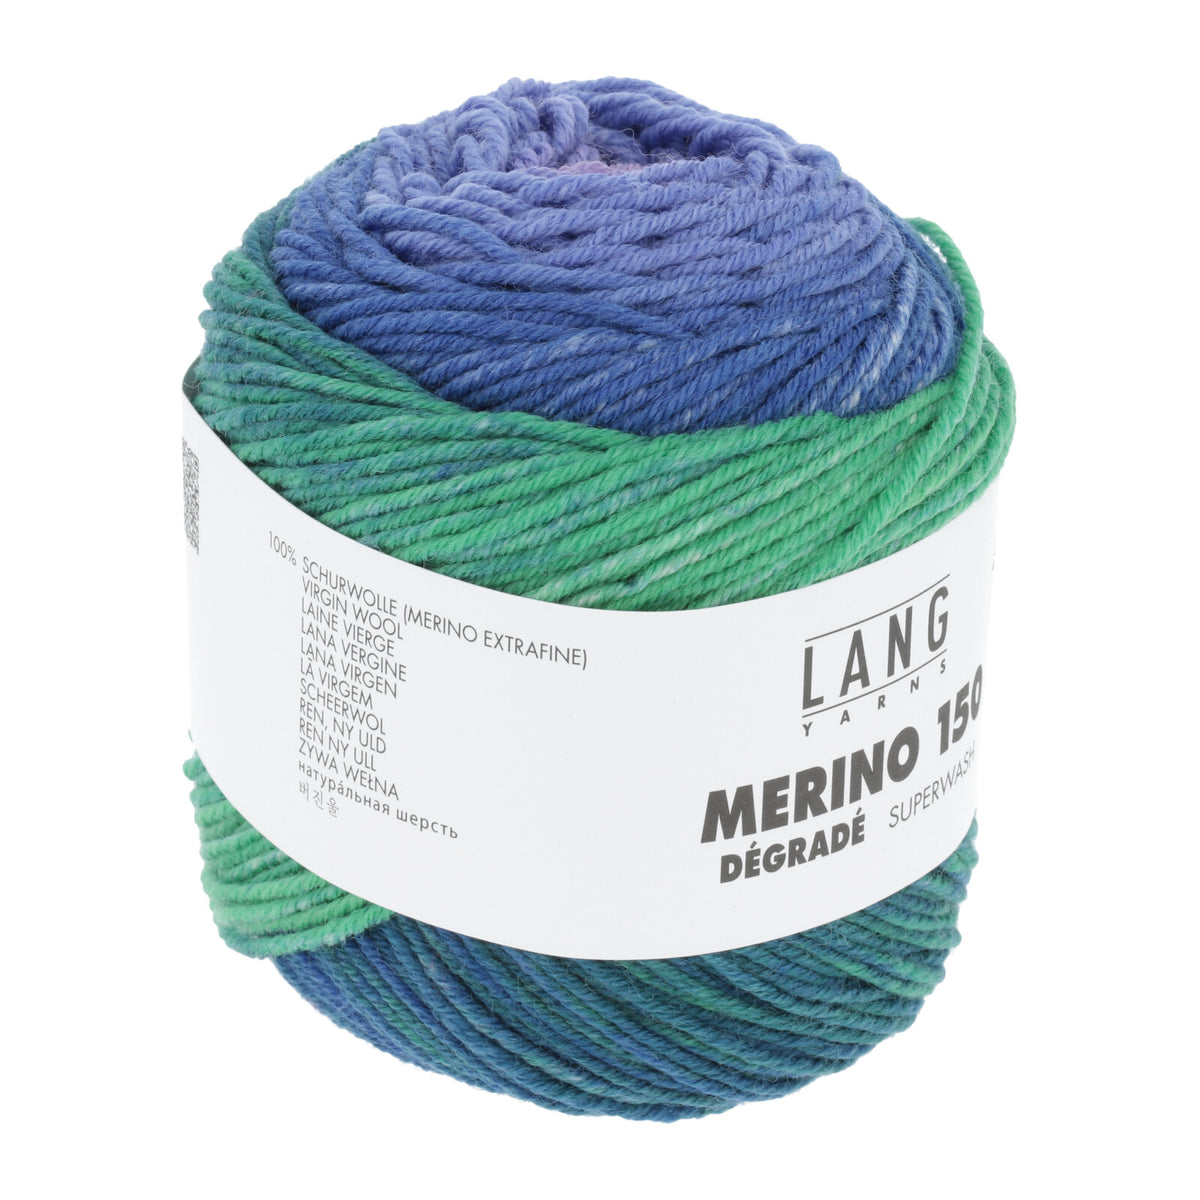 Lang Yarns Merino 150 Degrade knitting yarn color 0011